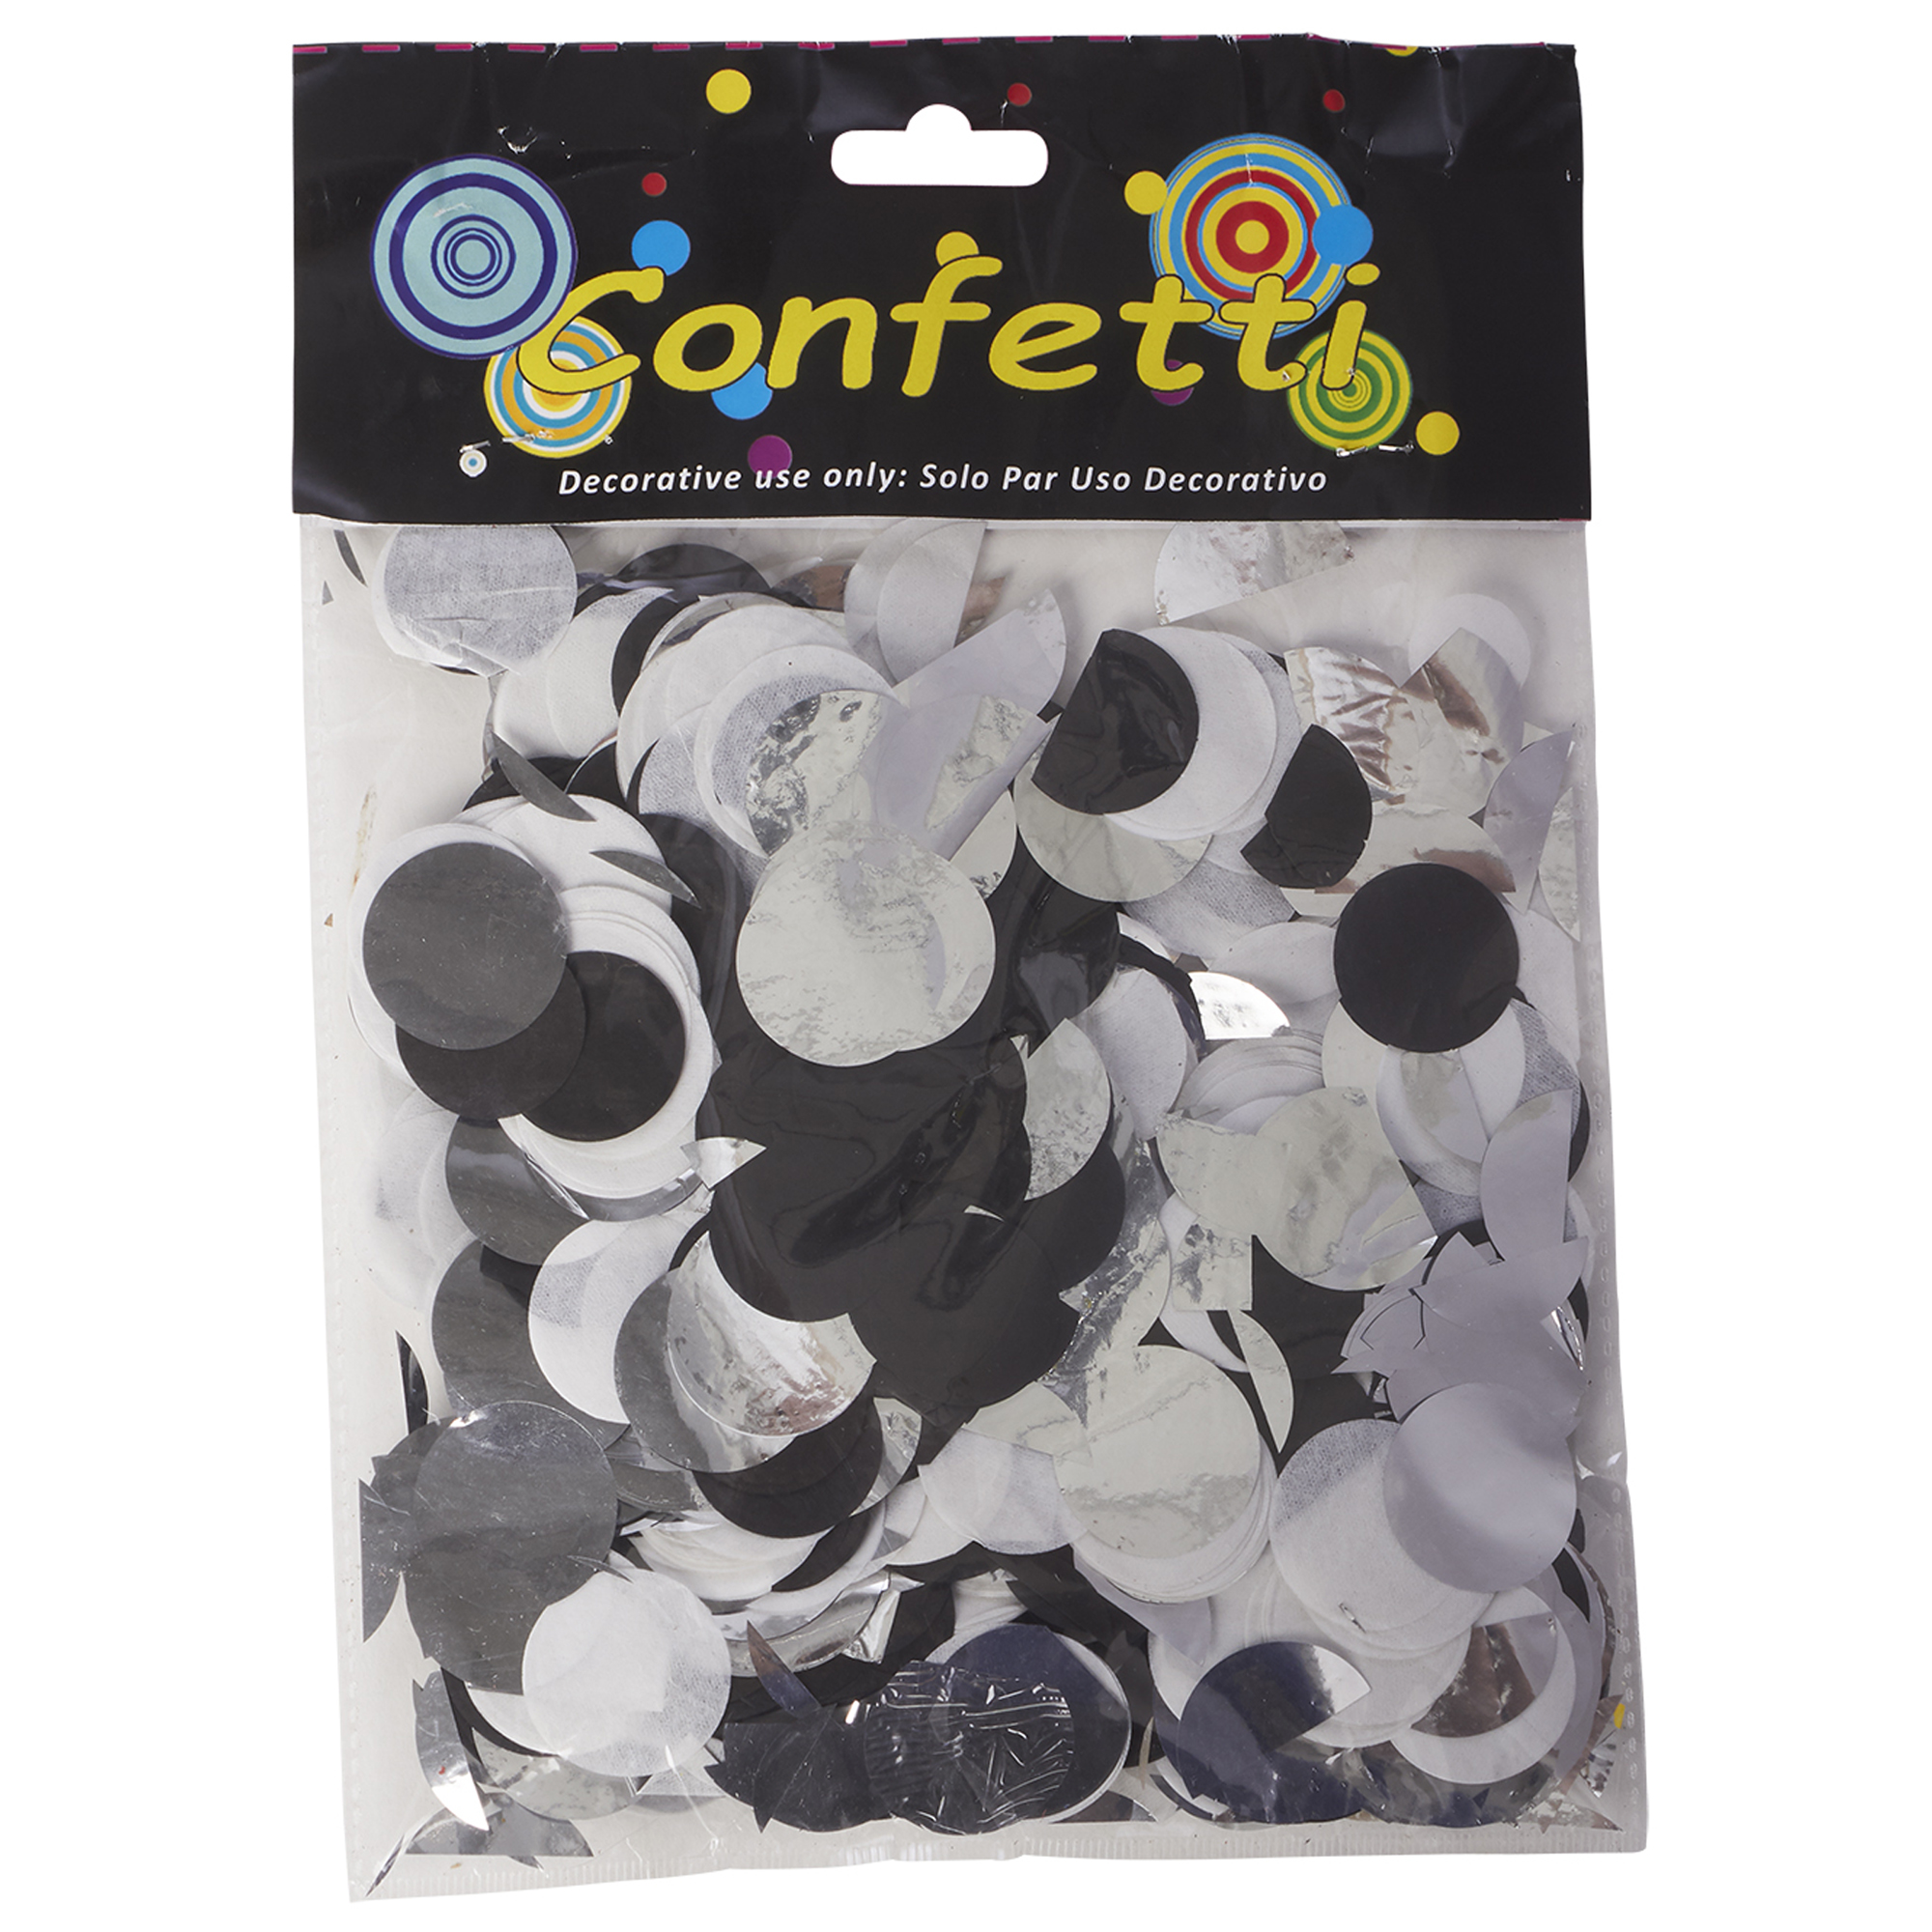 Mixed Confetti 1" 30g/bag - Silver